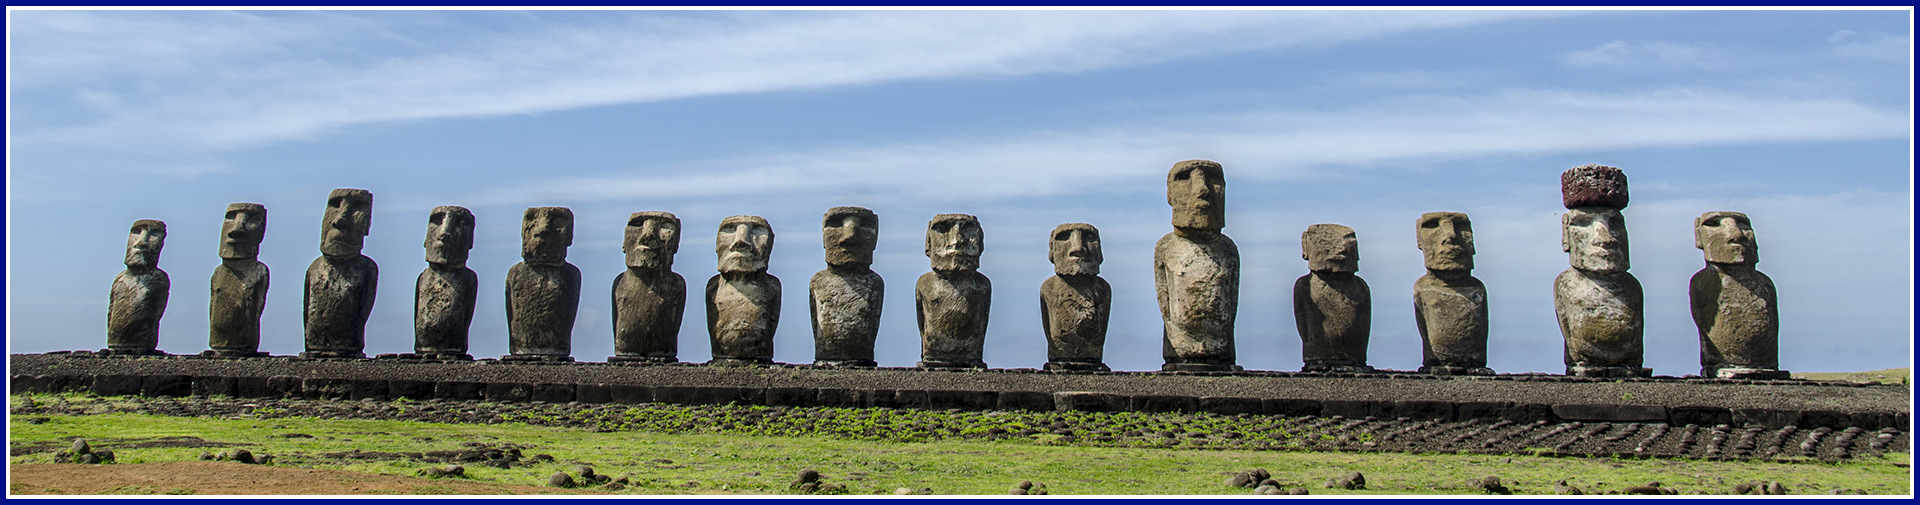 Chile - isla de Rapa Nui o Pascua - Ahu Tongariki